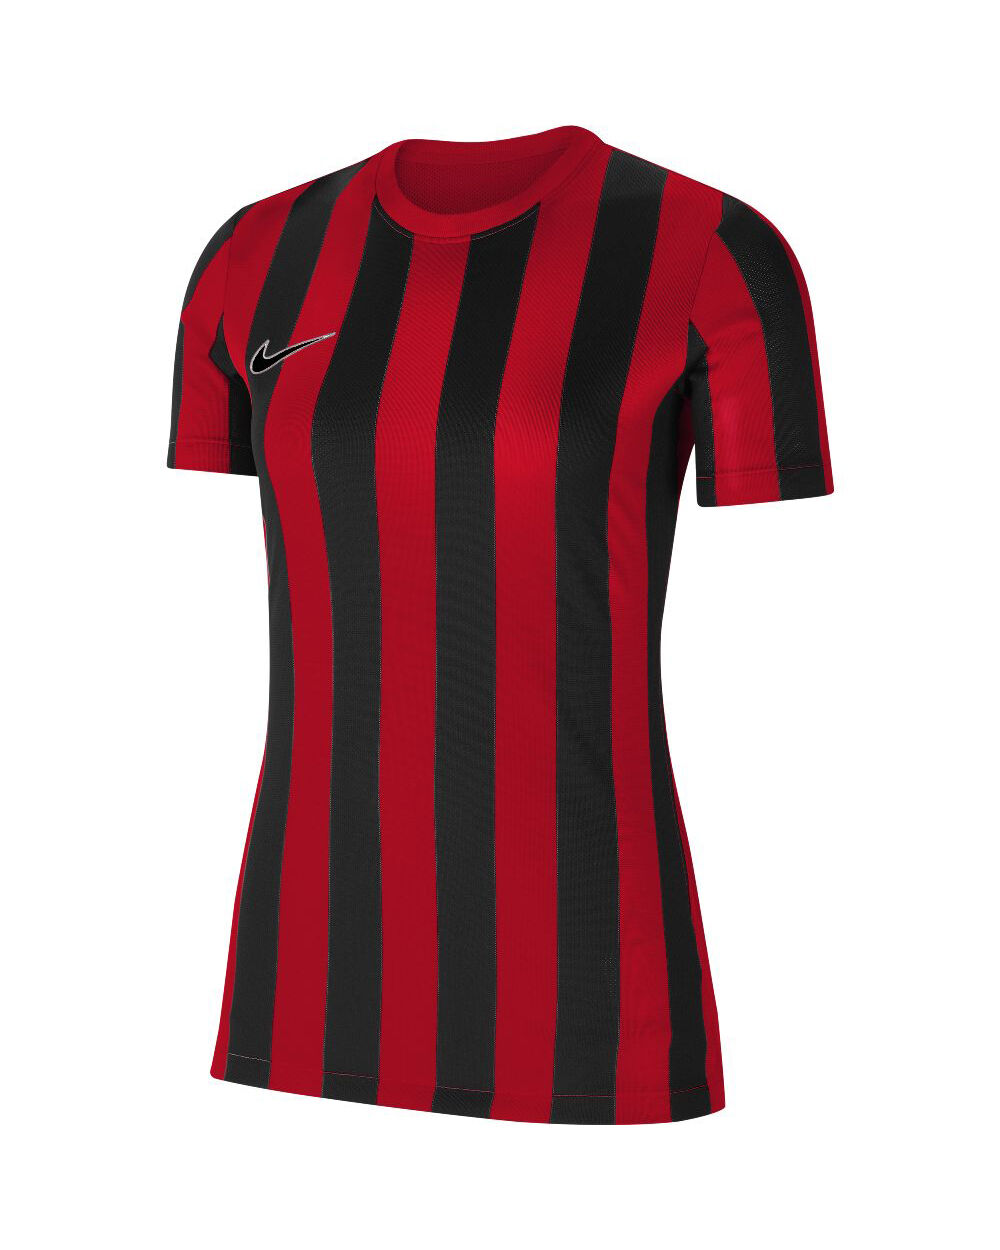 Camiseta Nike Striped Division IV Rojo y Negro para Mujeres - CW3816-658